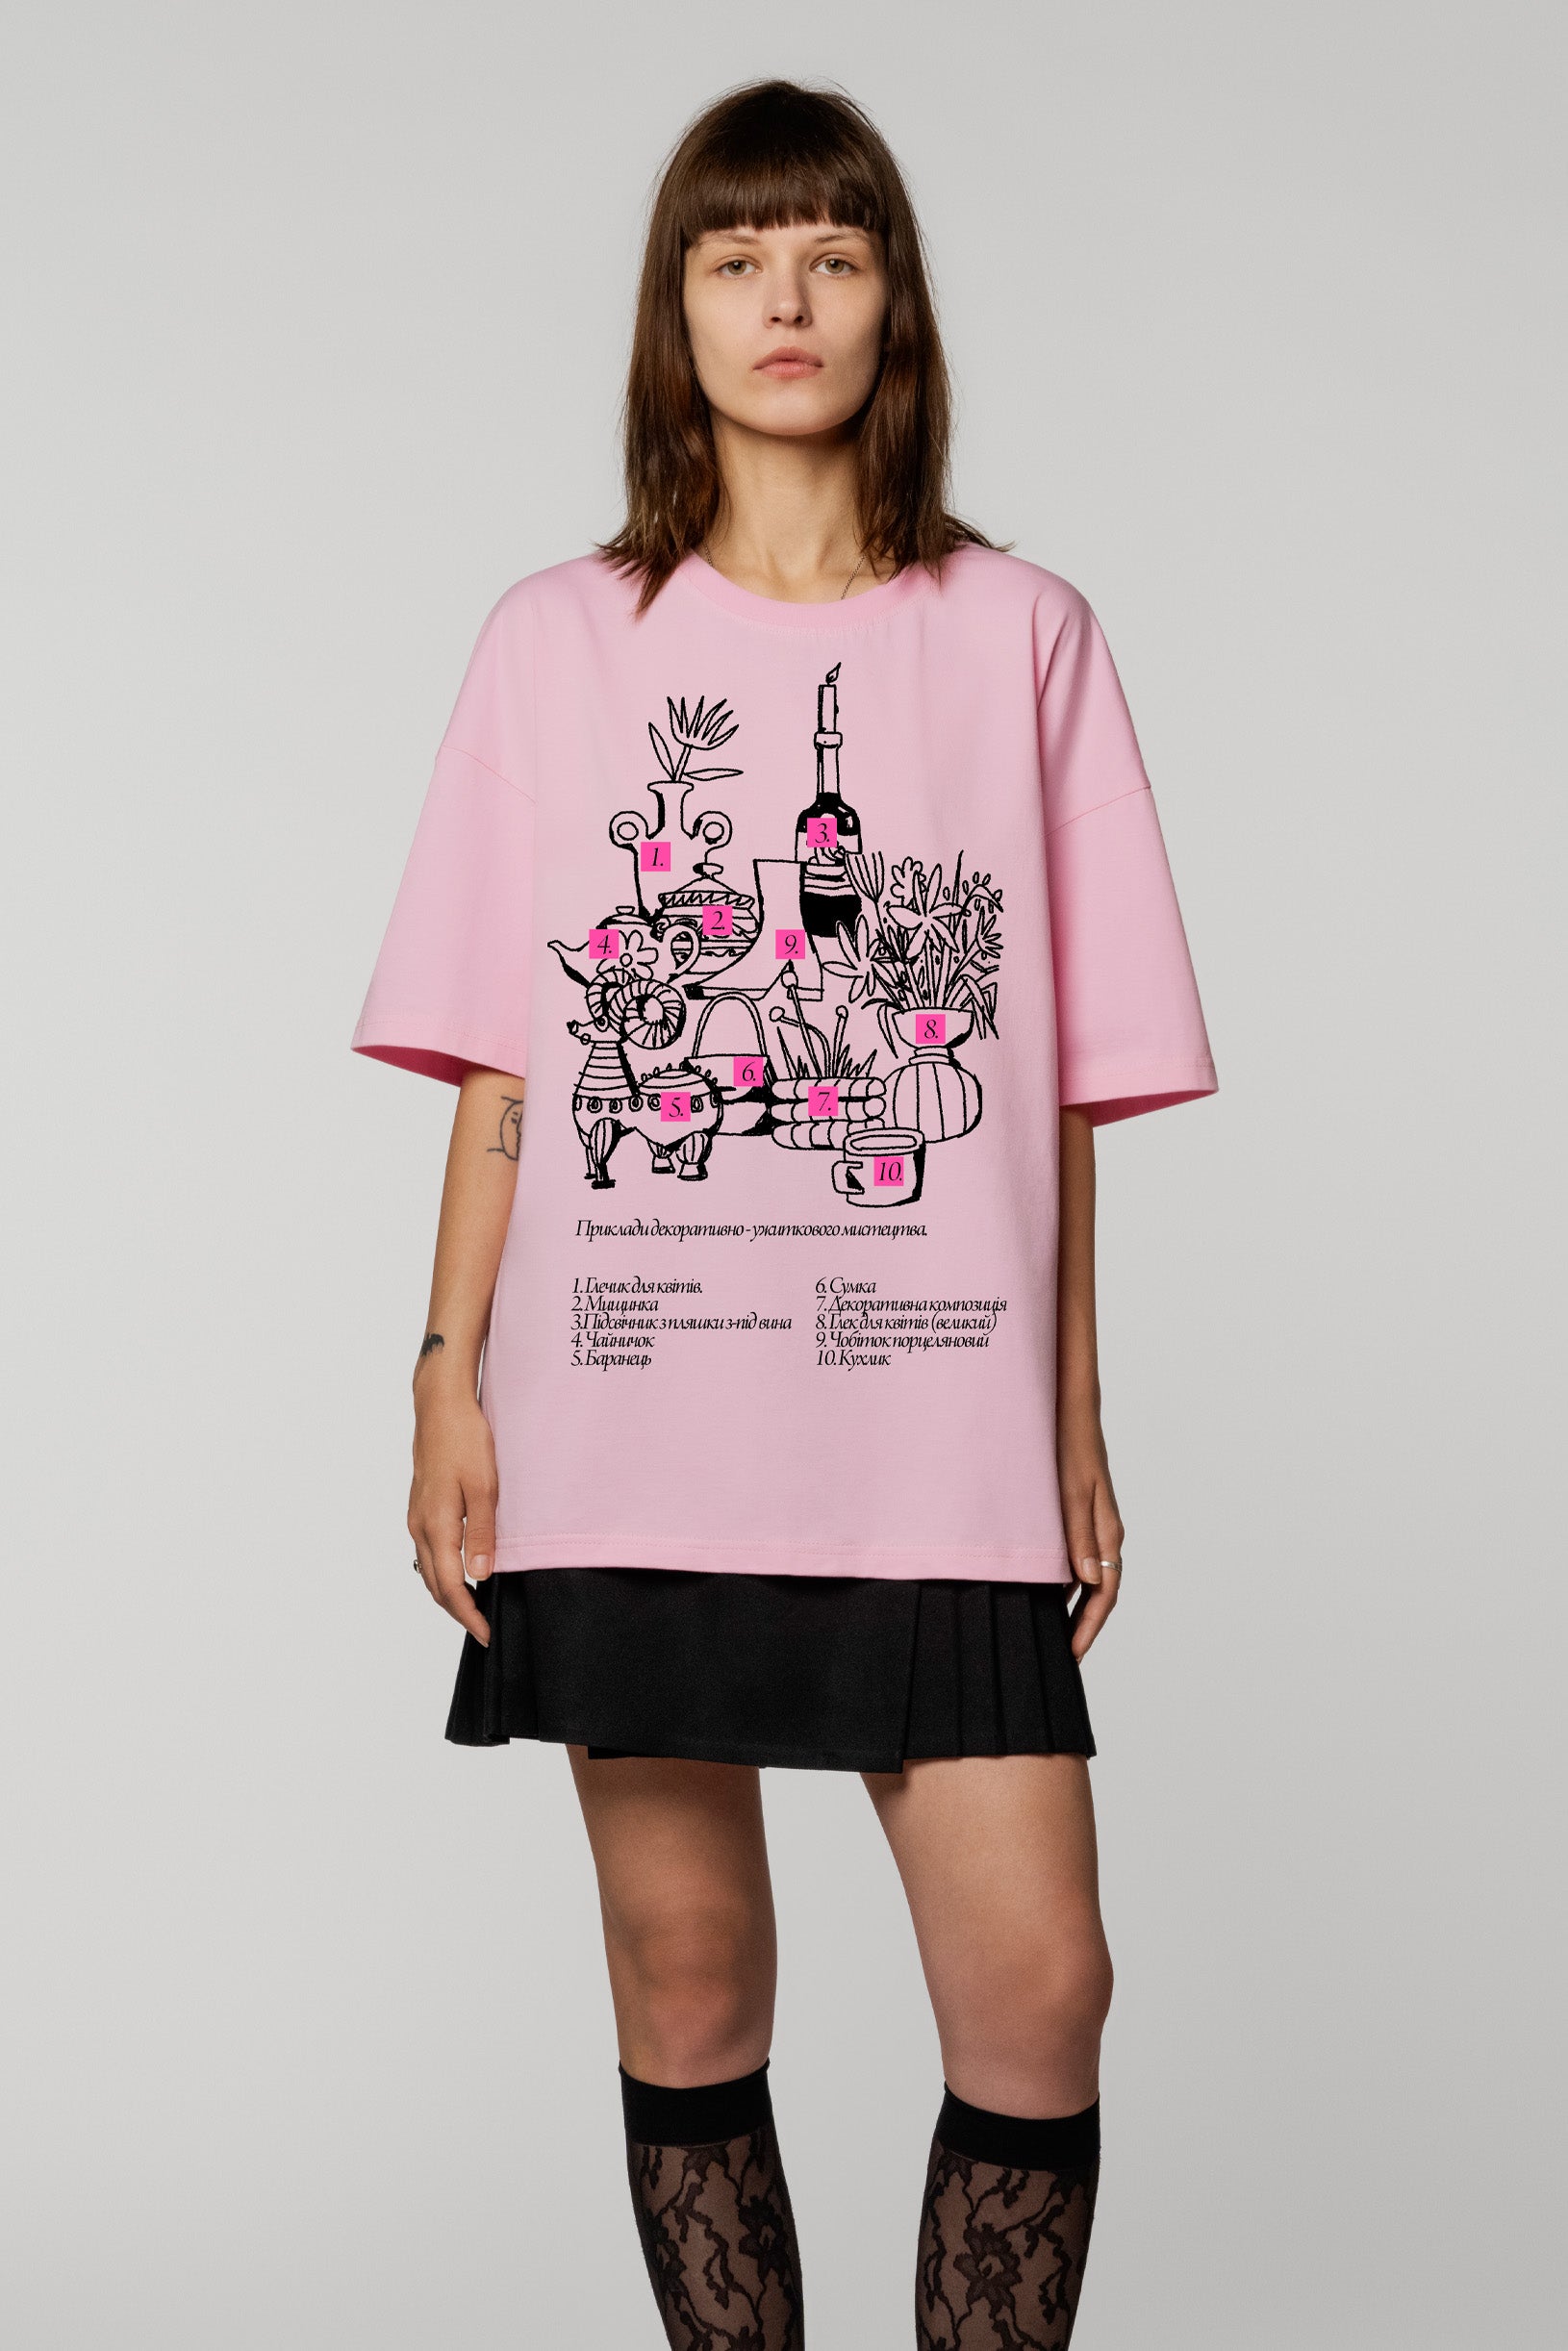 Syndicate x Derega Applied Art T-Shirt Pink